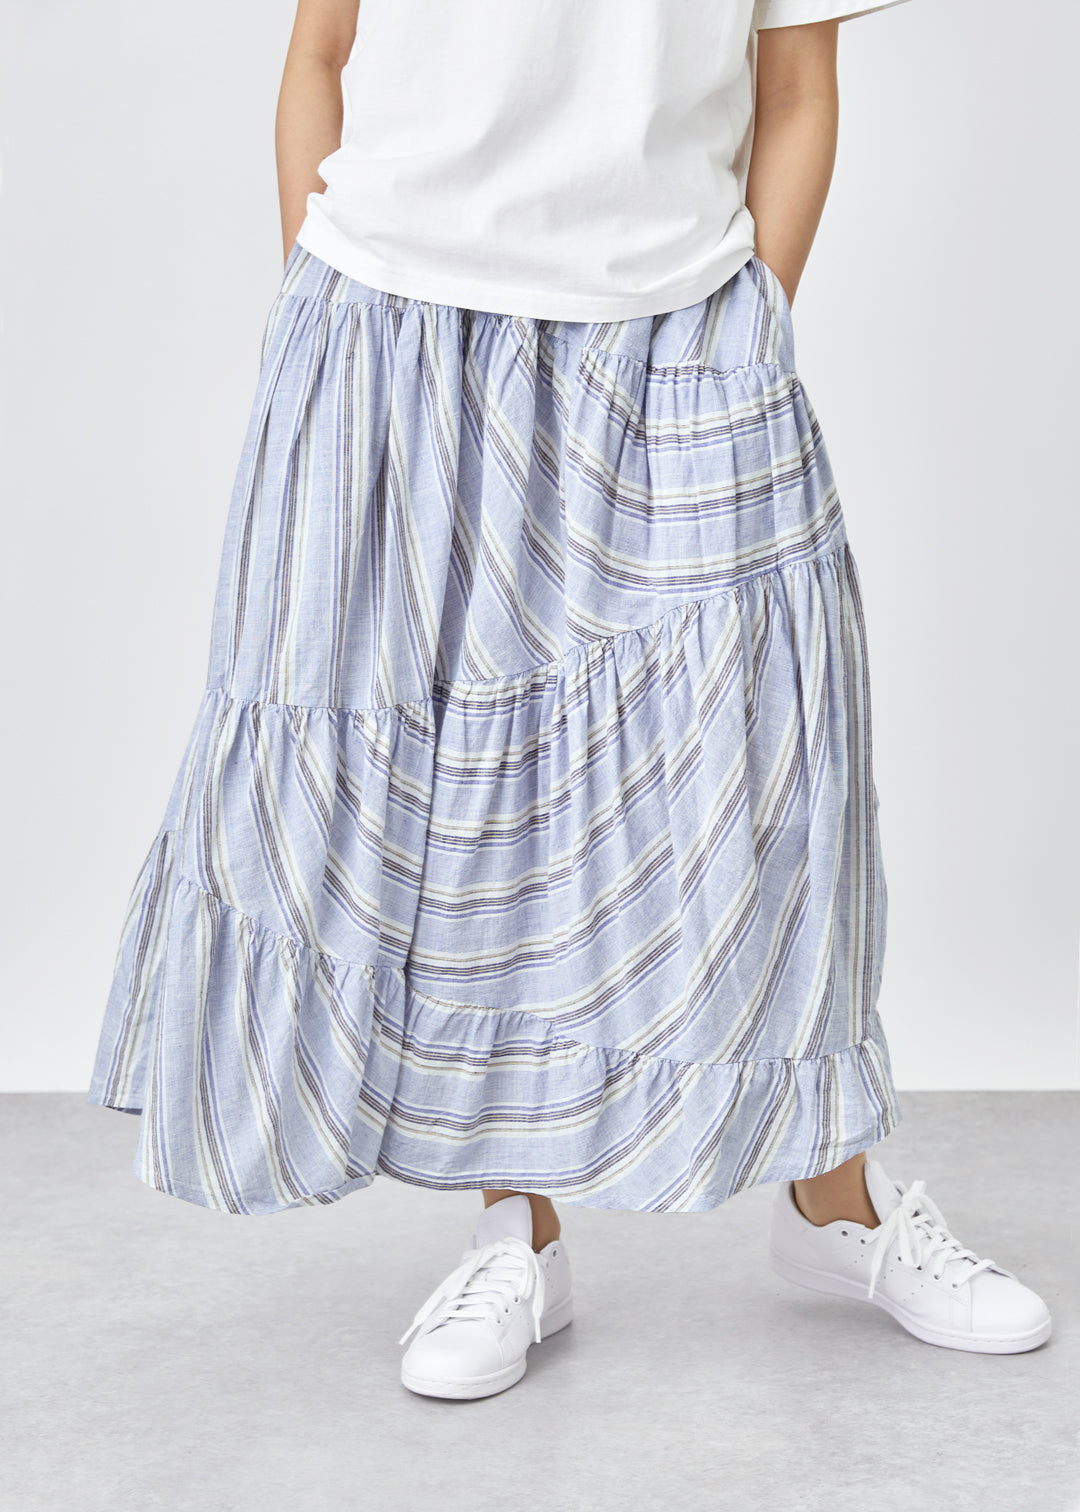 Yui Random Tiered Skirt 56s stripe